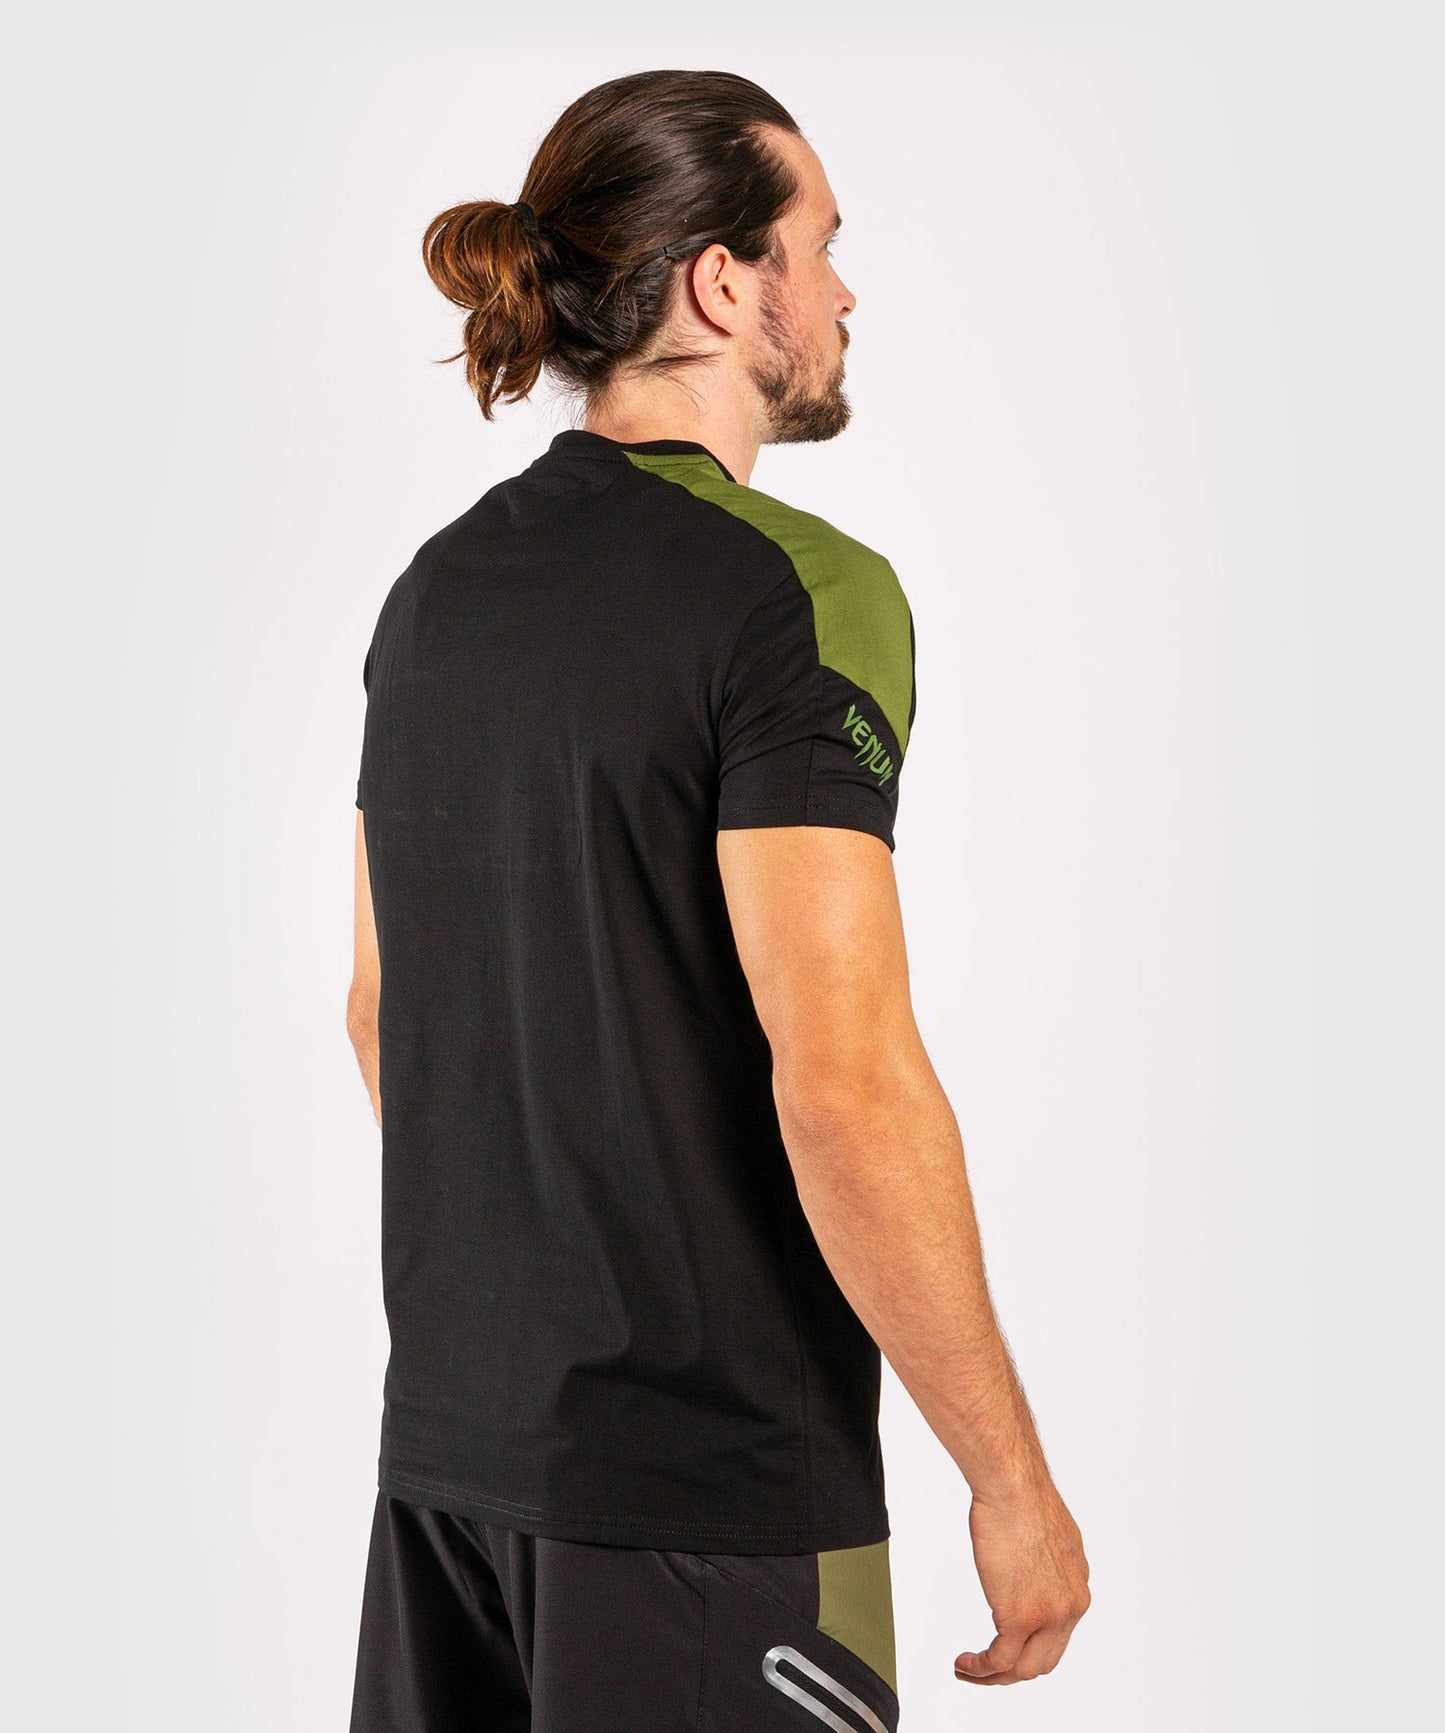 Venum Cargo T-shirt - Black/Green